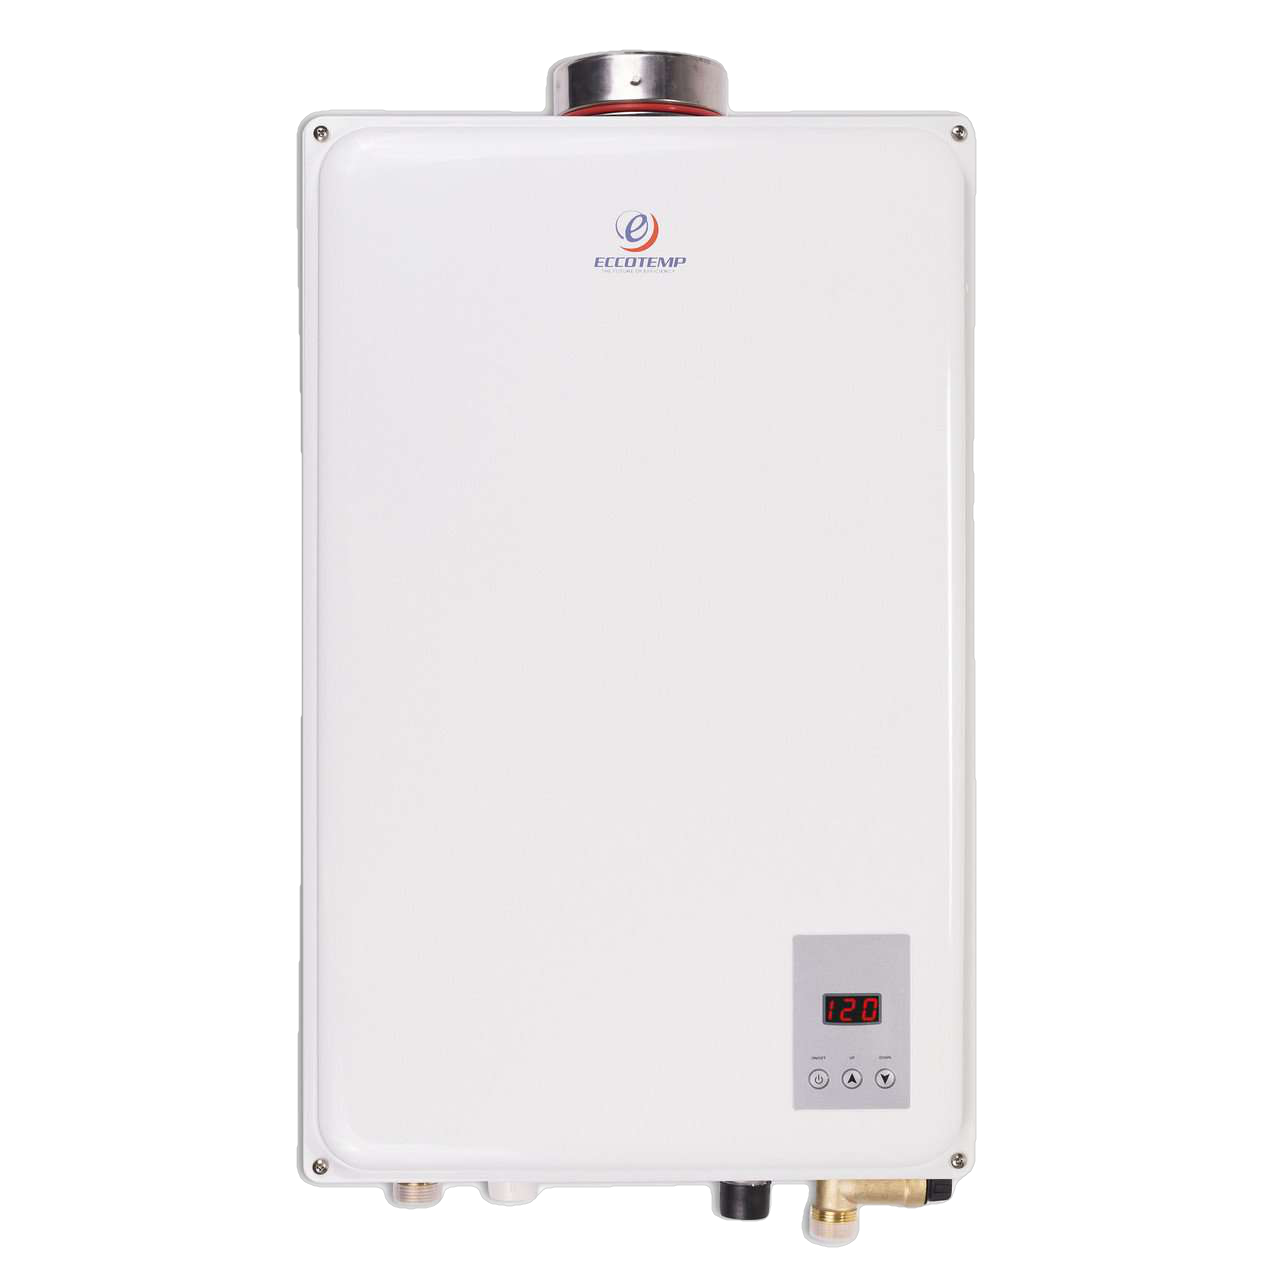 Eccotemp, Eccotemp 45HI-NG 6.8 GPM Natural Gas Tankless Water Heater Manufacturer RFB